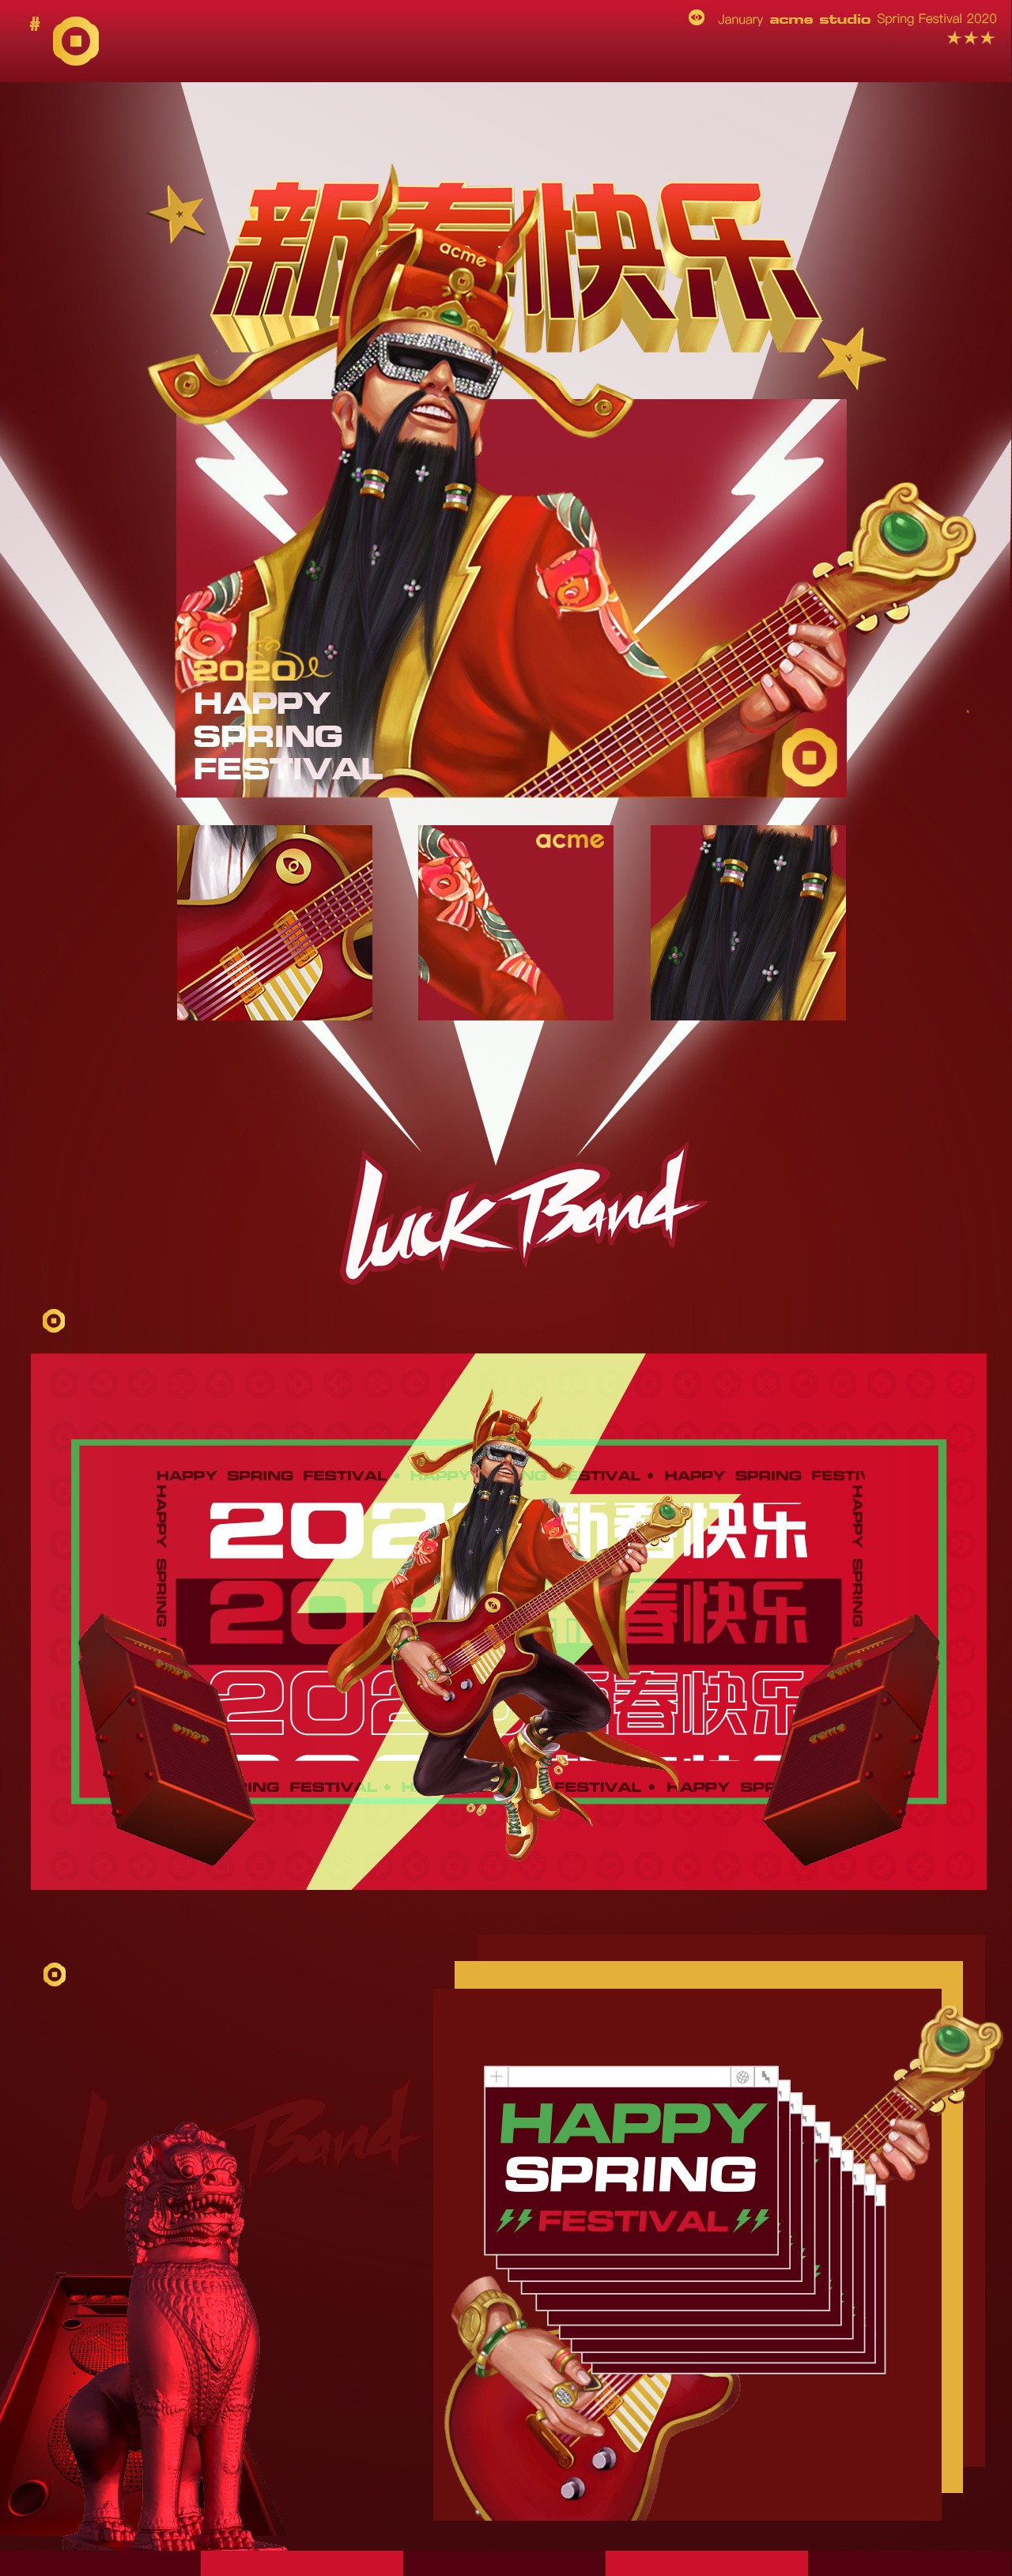 #上海约里 creative/Luck Band#图2